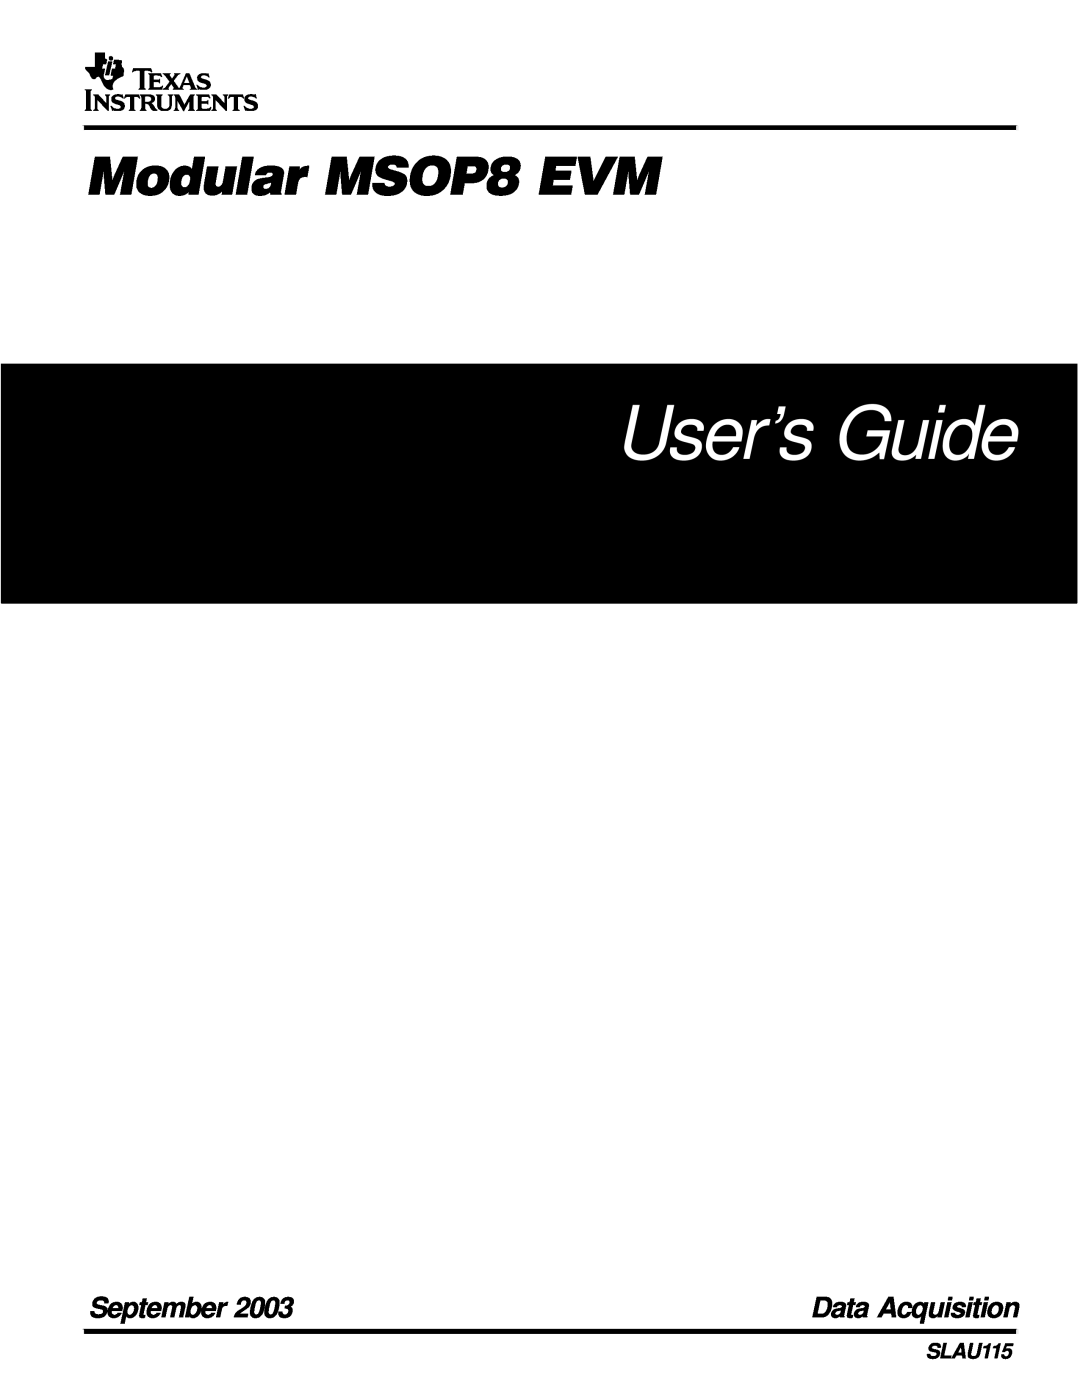 Texas Instruments manual User’s Guide, Modular MSOP8 EVM, September, Data Acquisition, SLAU115 